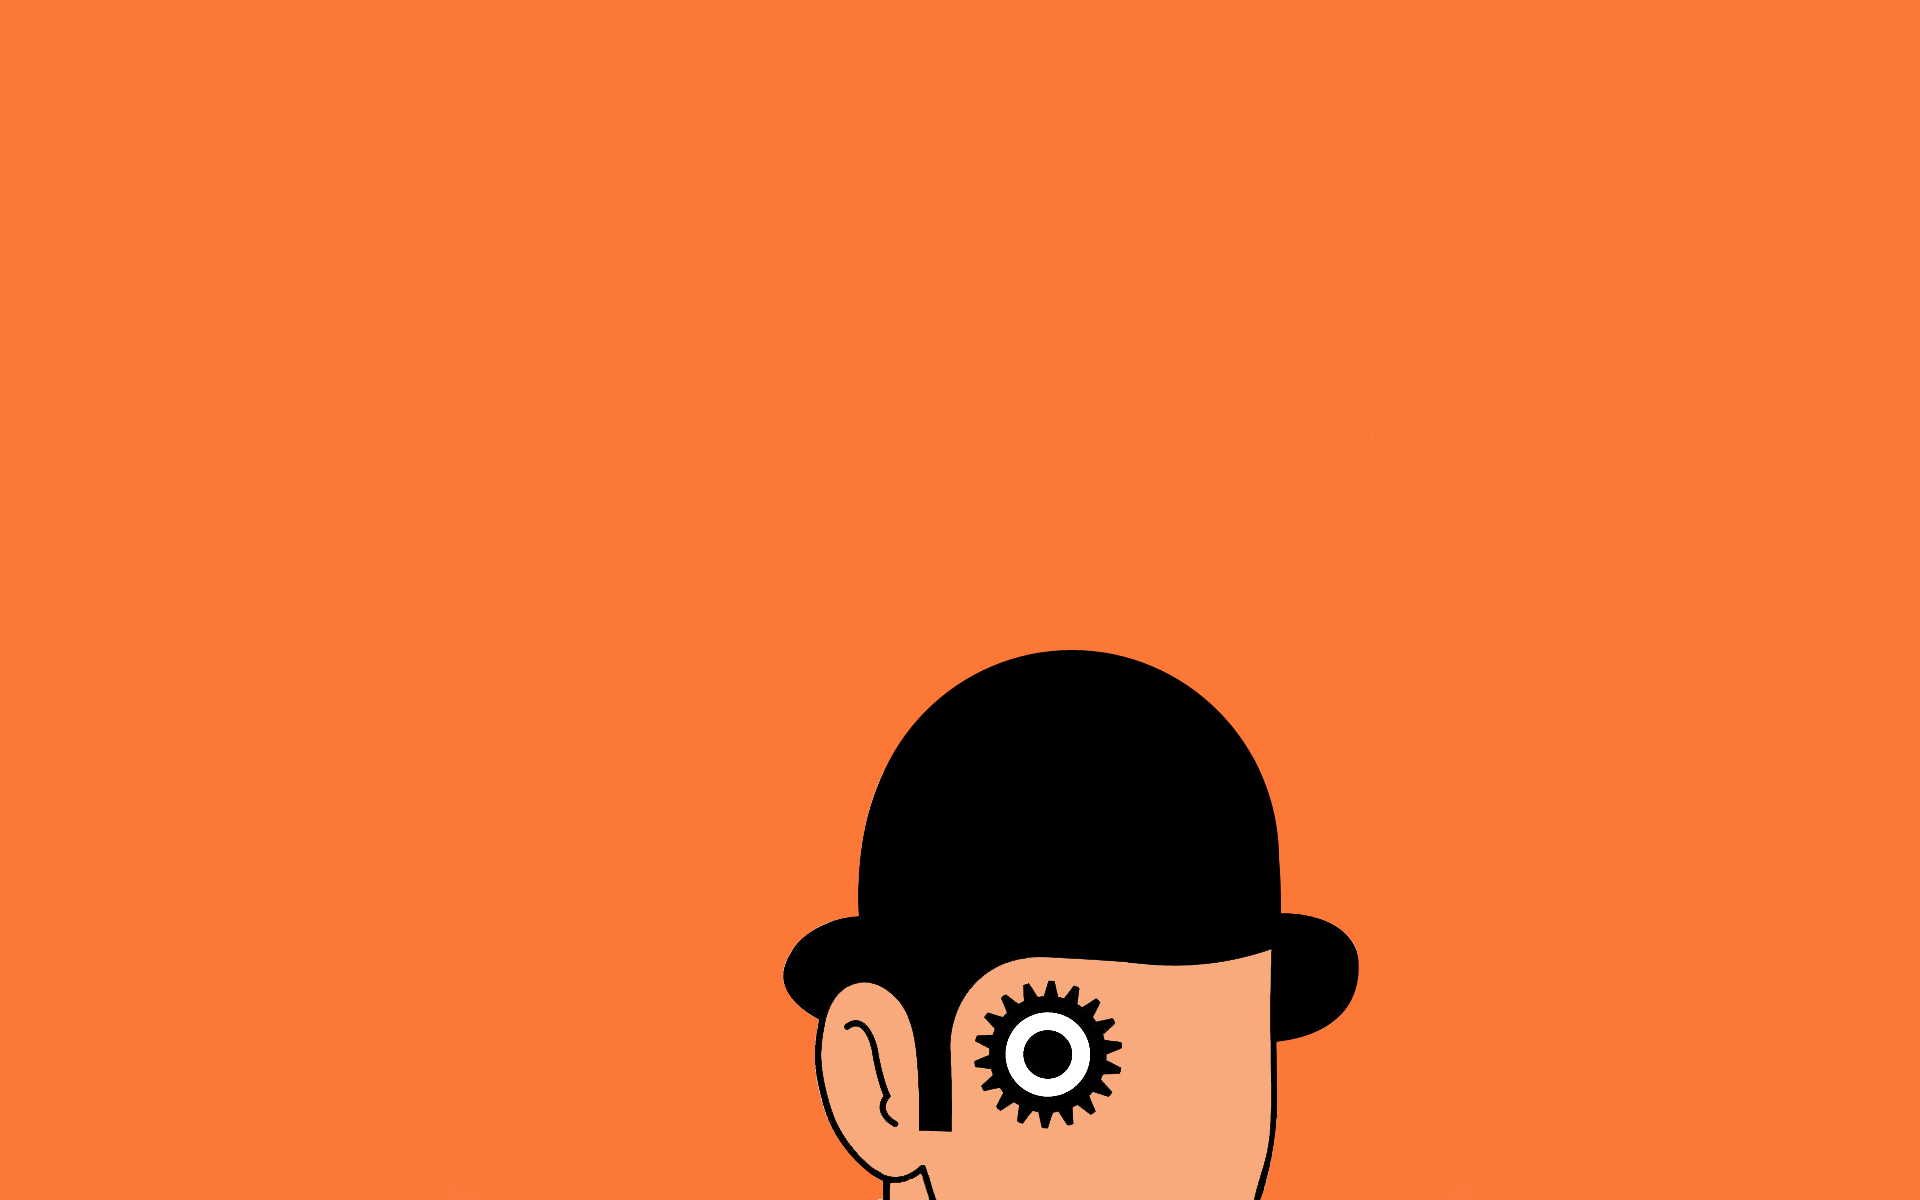 A Clockwork Orange (minimalistic)